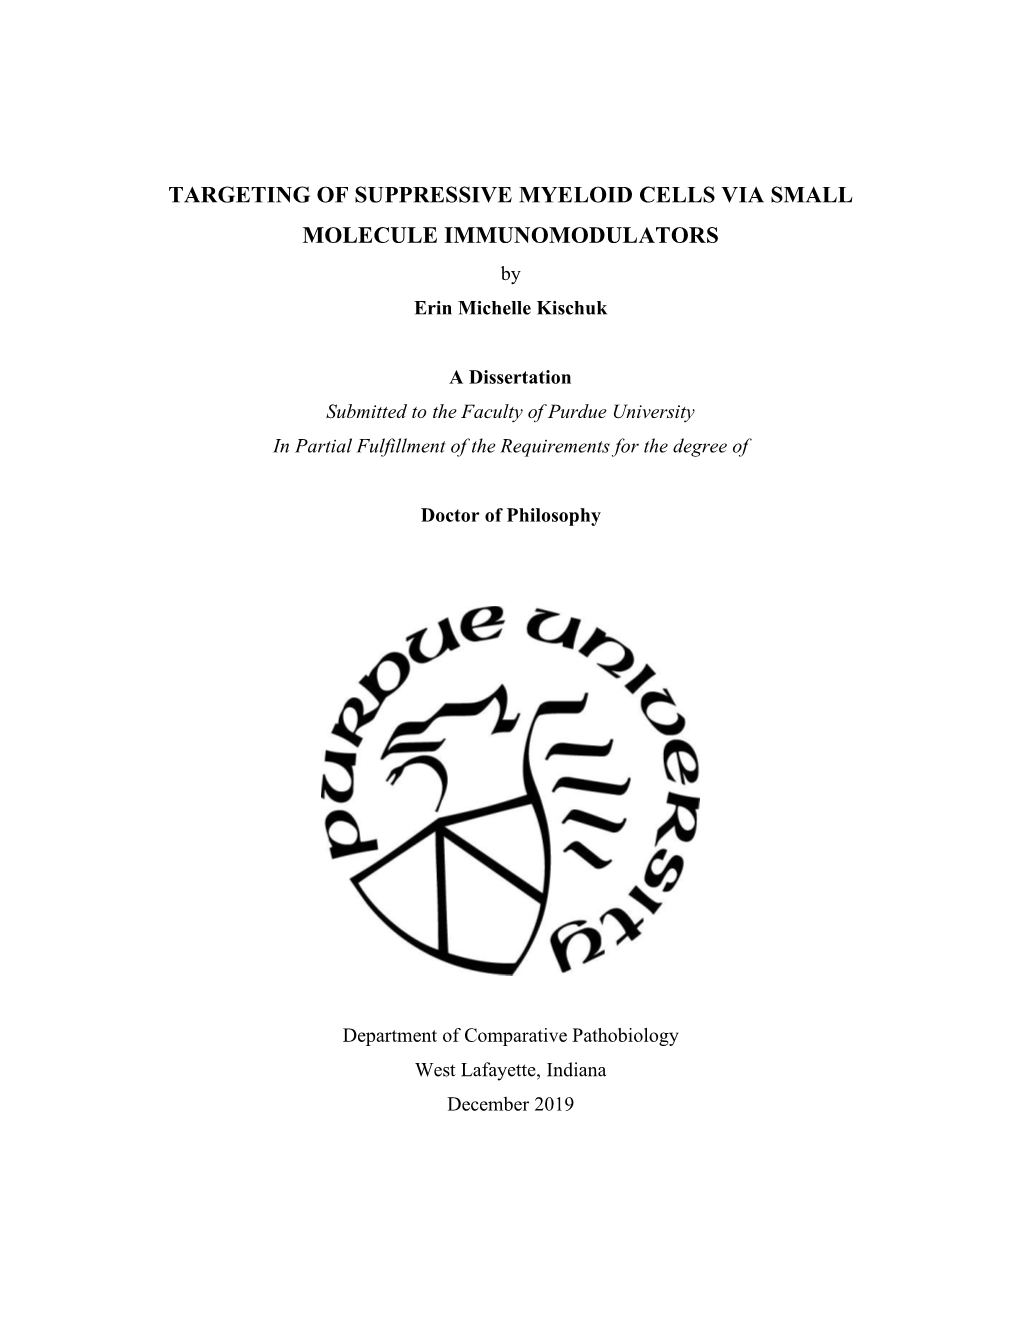 TARGETING of SUPPRESSIVE MYELOID CELLS VIA SMALL MOLECULE IMMUNOMODULATORS by Erin Michelle Kischuk